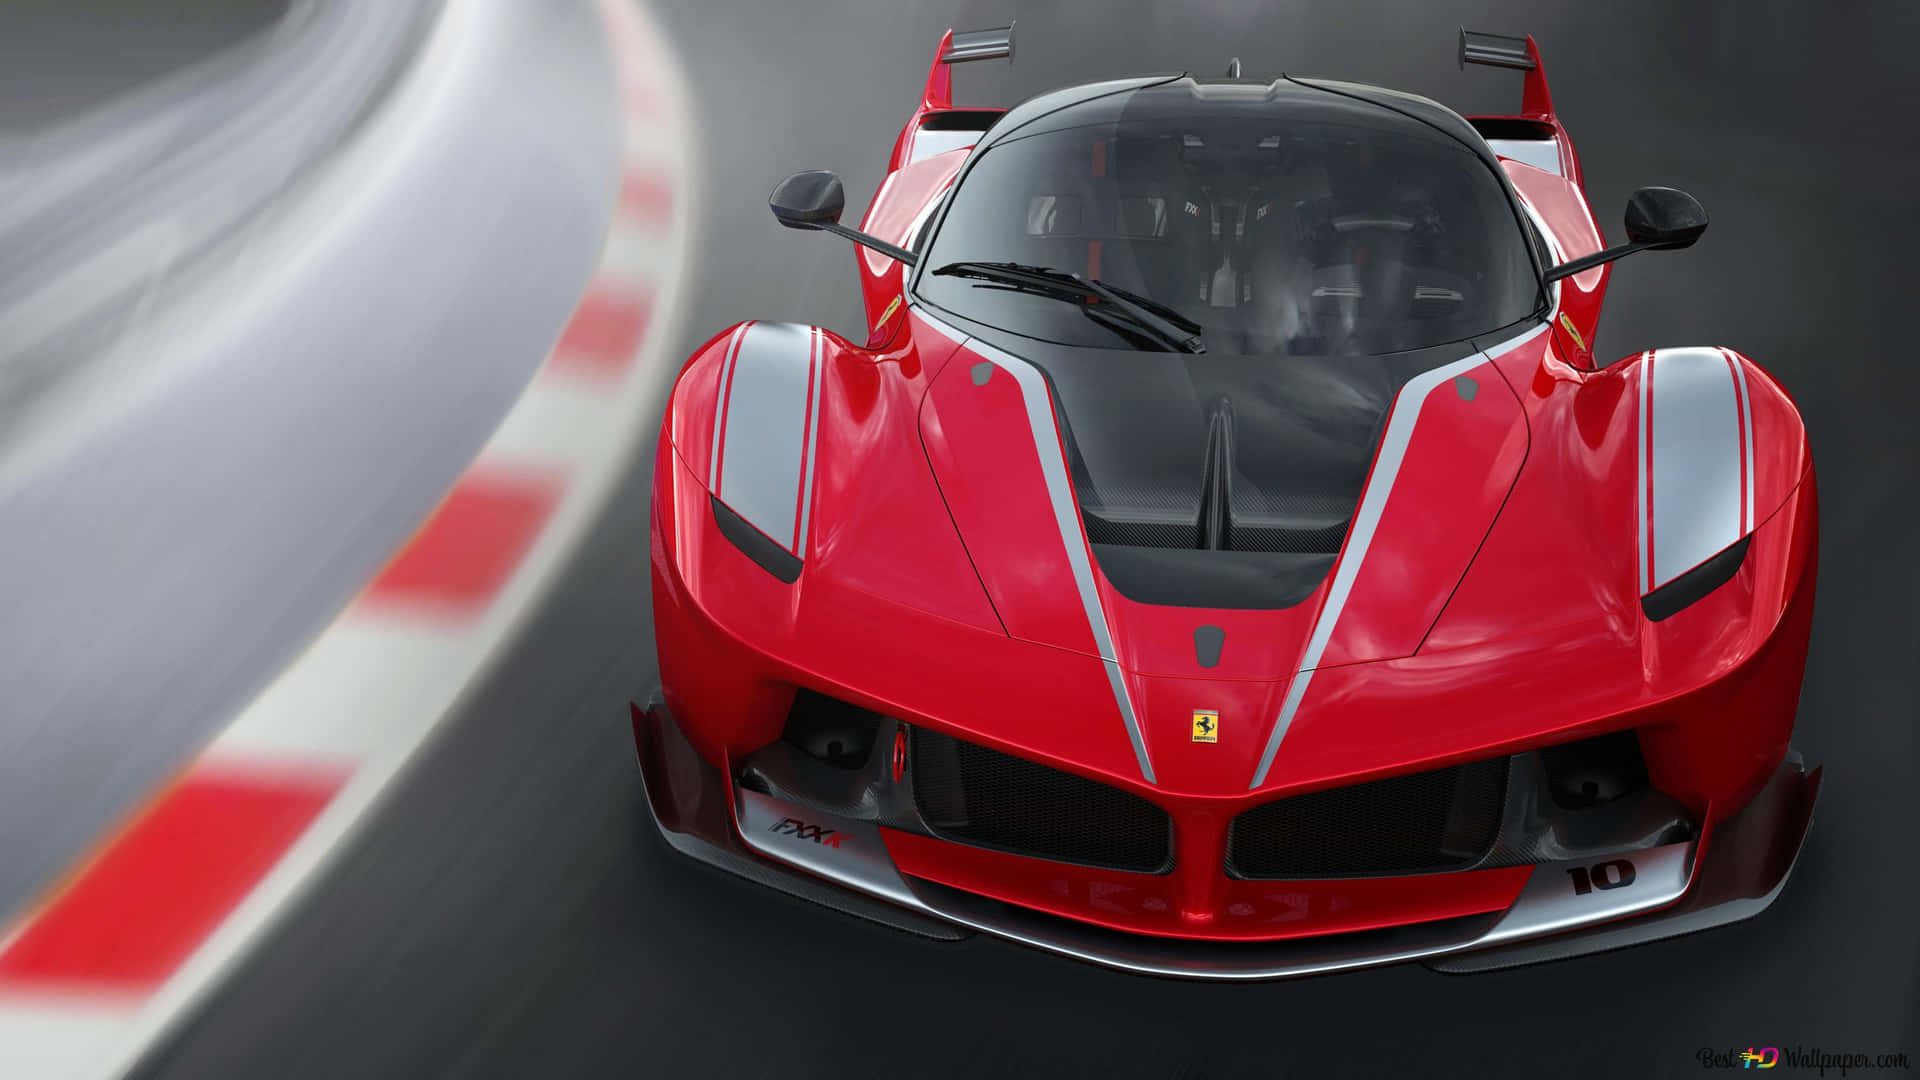 Atraccióny Rendimiento: Un Ferrari Domina La Carretera. Fondo de pantalla